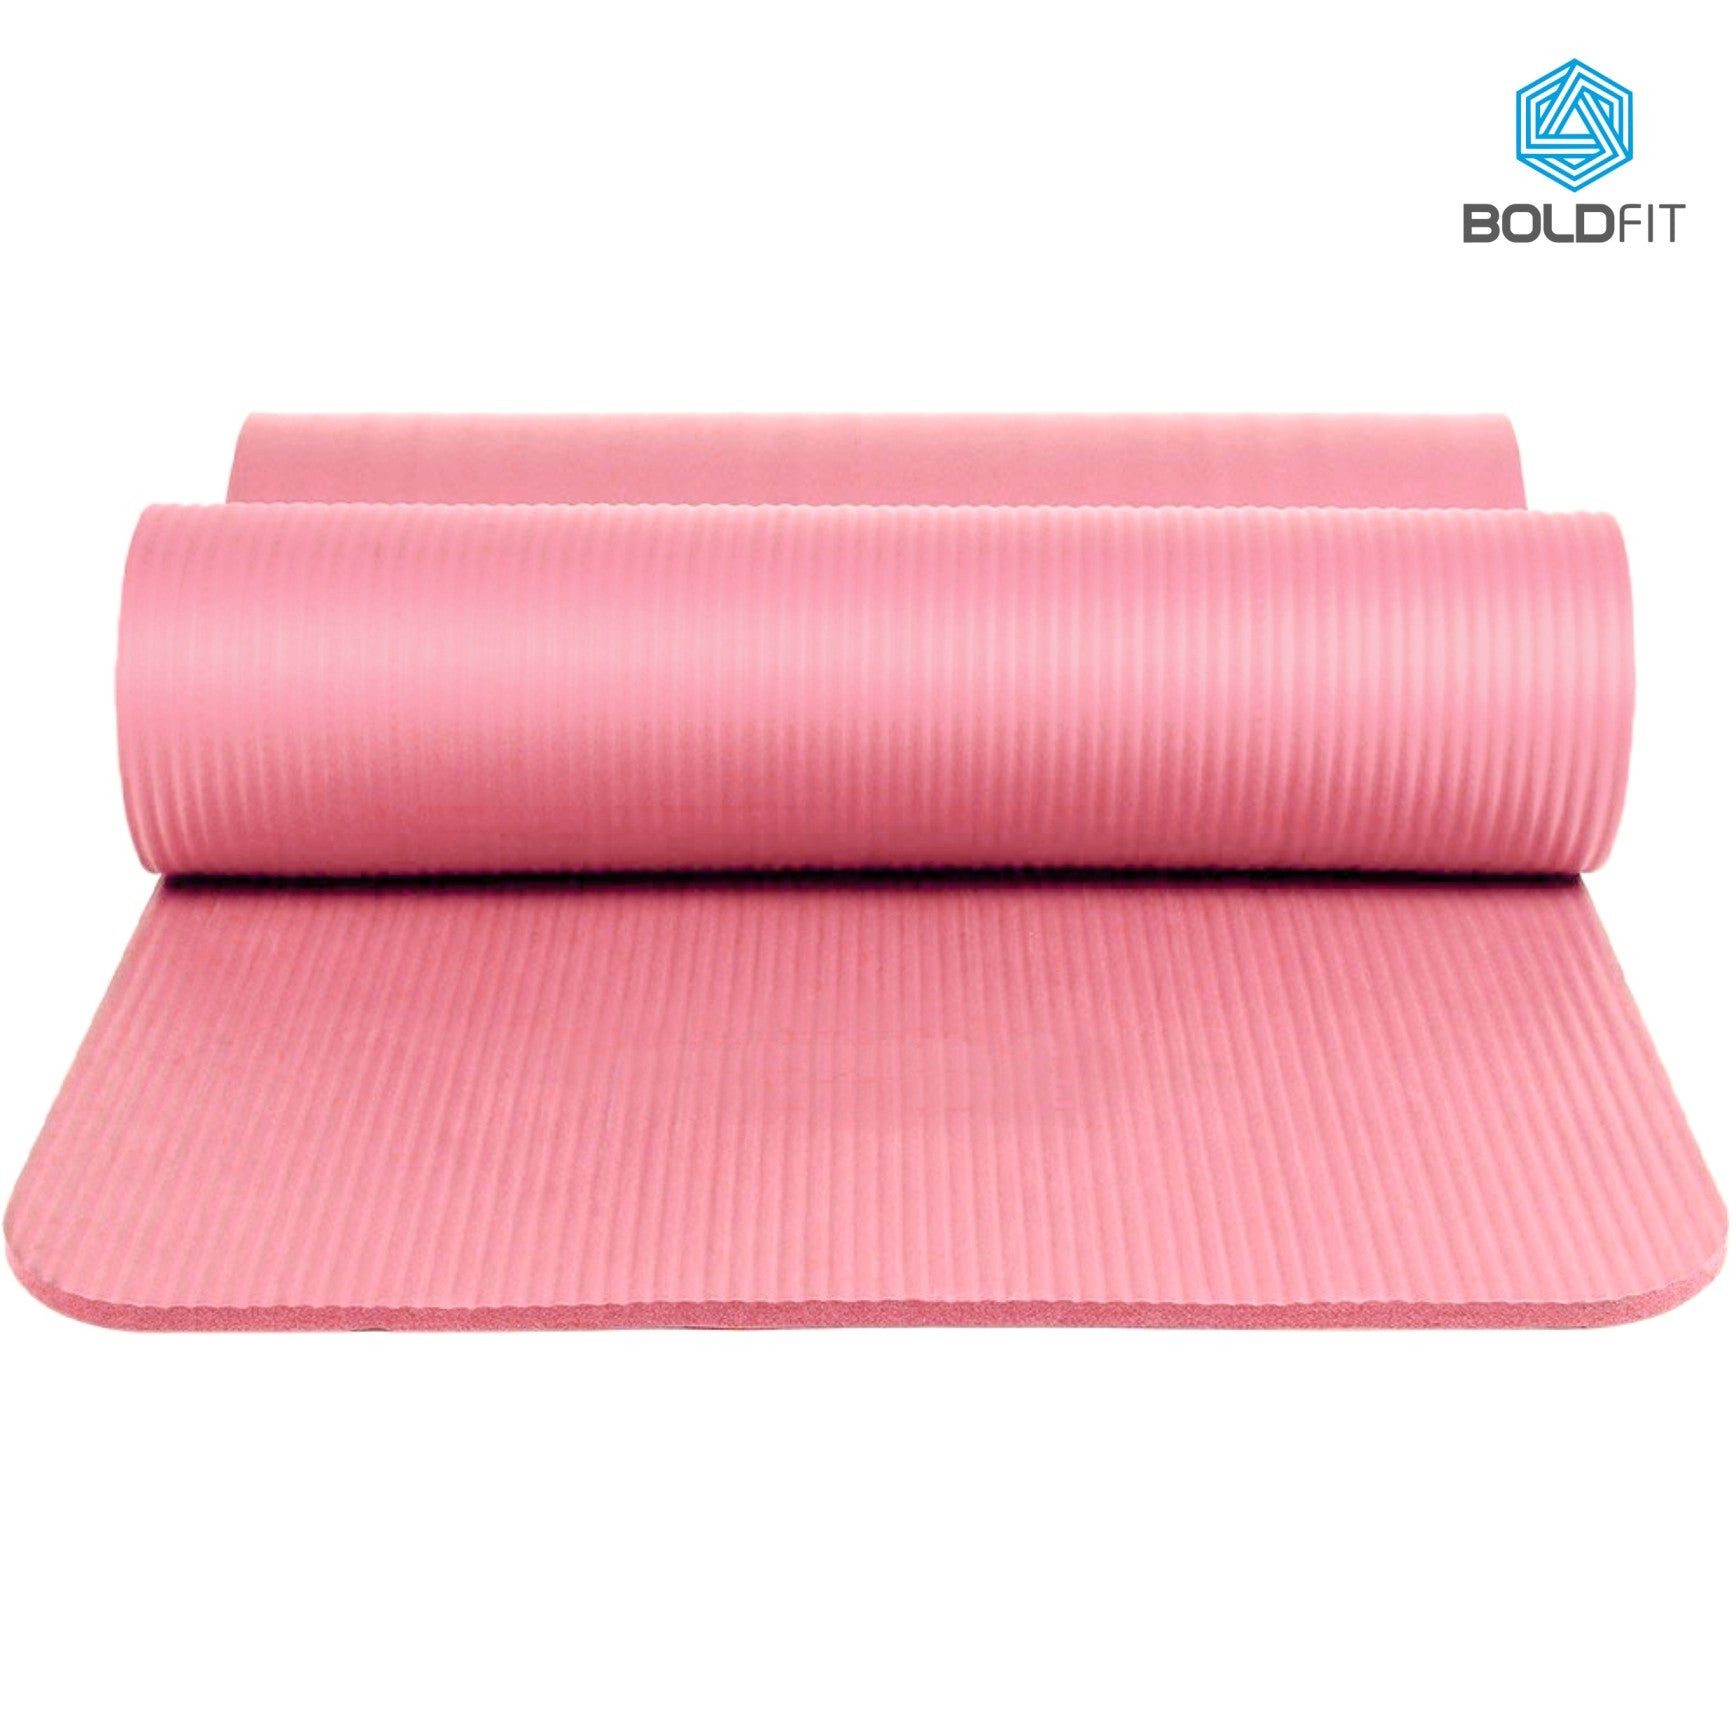 Boldfit Yoga Mat For Men And Women Nbr Material - Pink Reviews